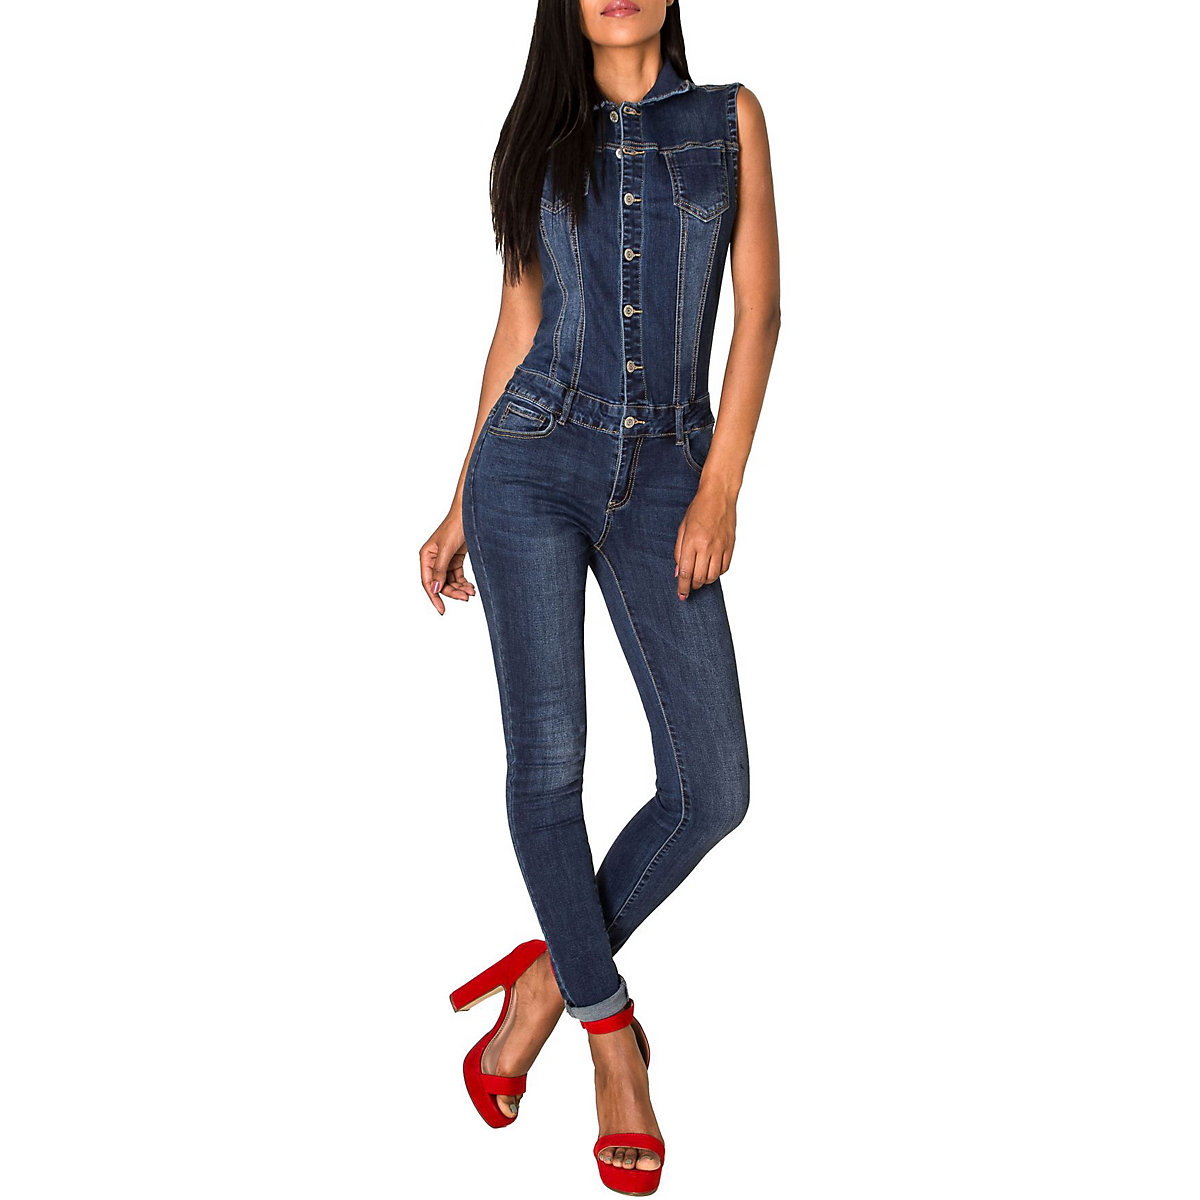 Nina Carter® Jeans Overall Jumpsuit Hosenanzug Einteiler dunkelblau